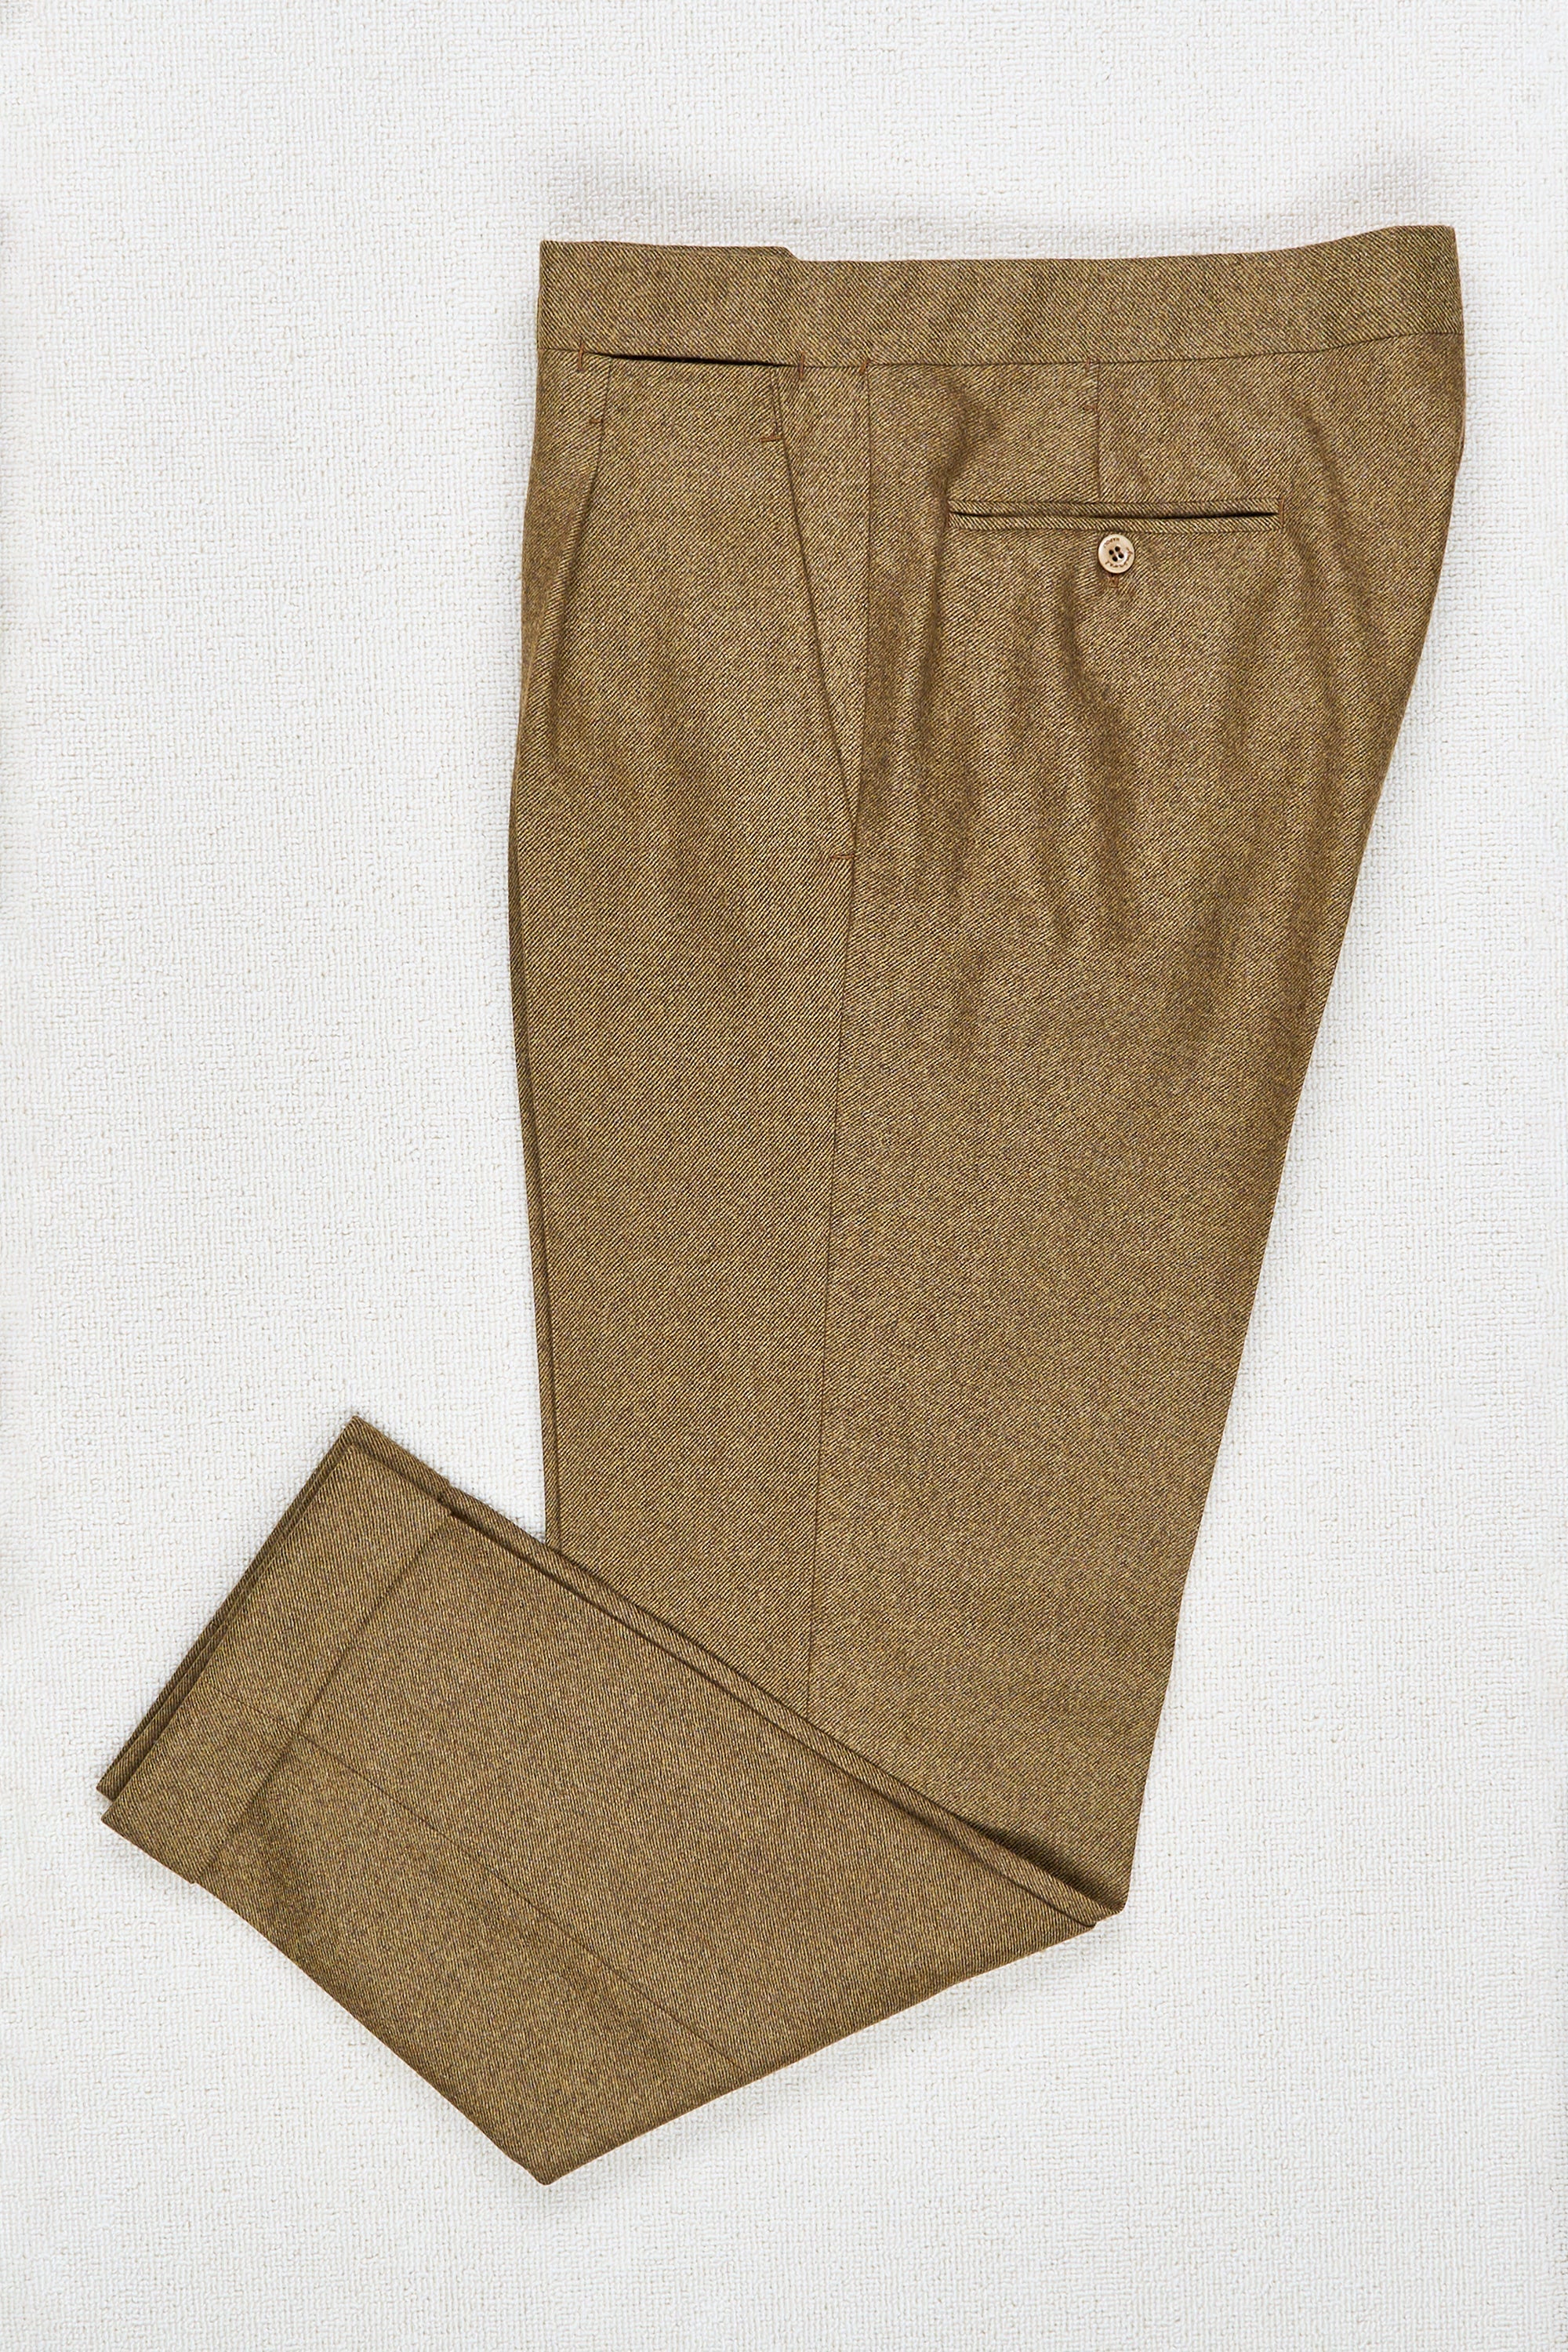 Ambrosi Napoli Olive-Brown Wool Twill Single Pleat Trousers Bespoke